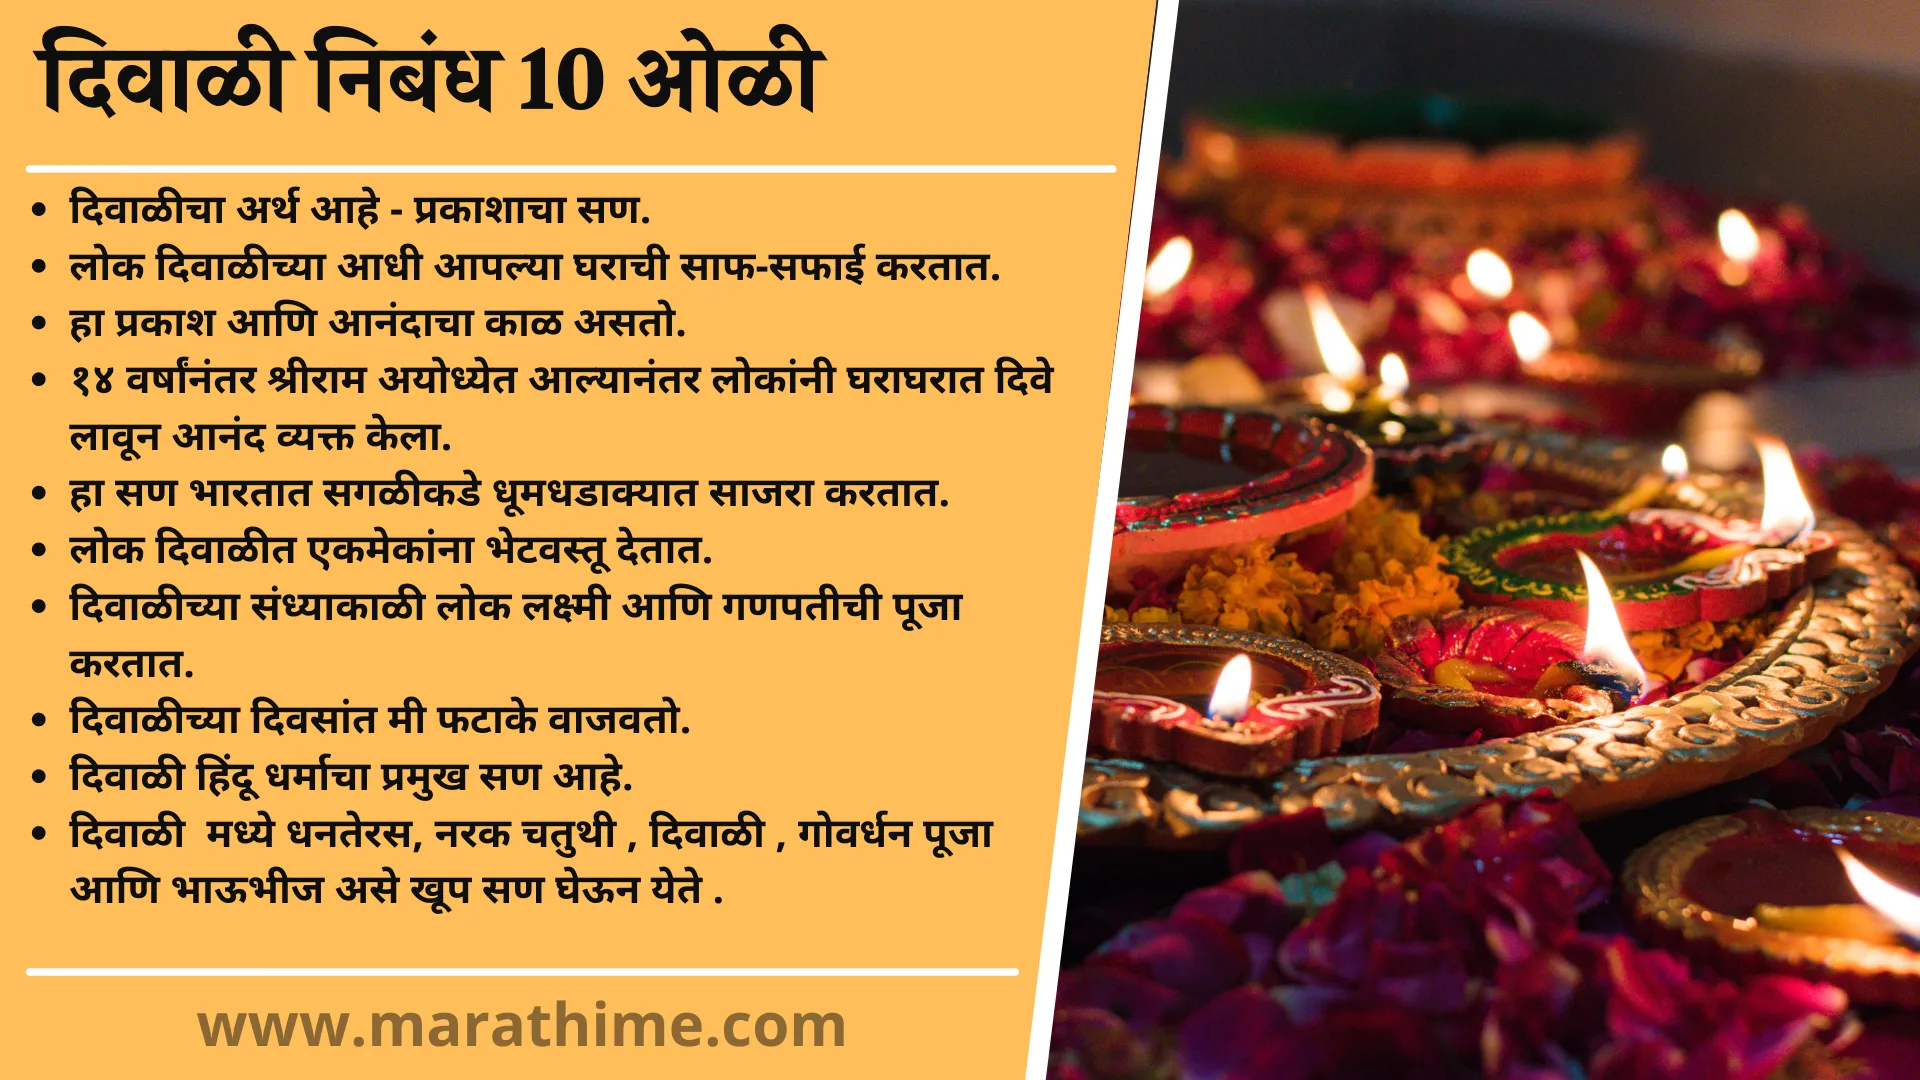 दिवाळी निबंध 10 ओळी-10 Lines Diwali in Marathi